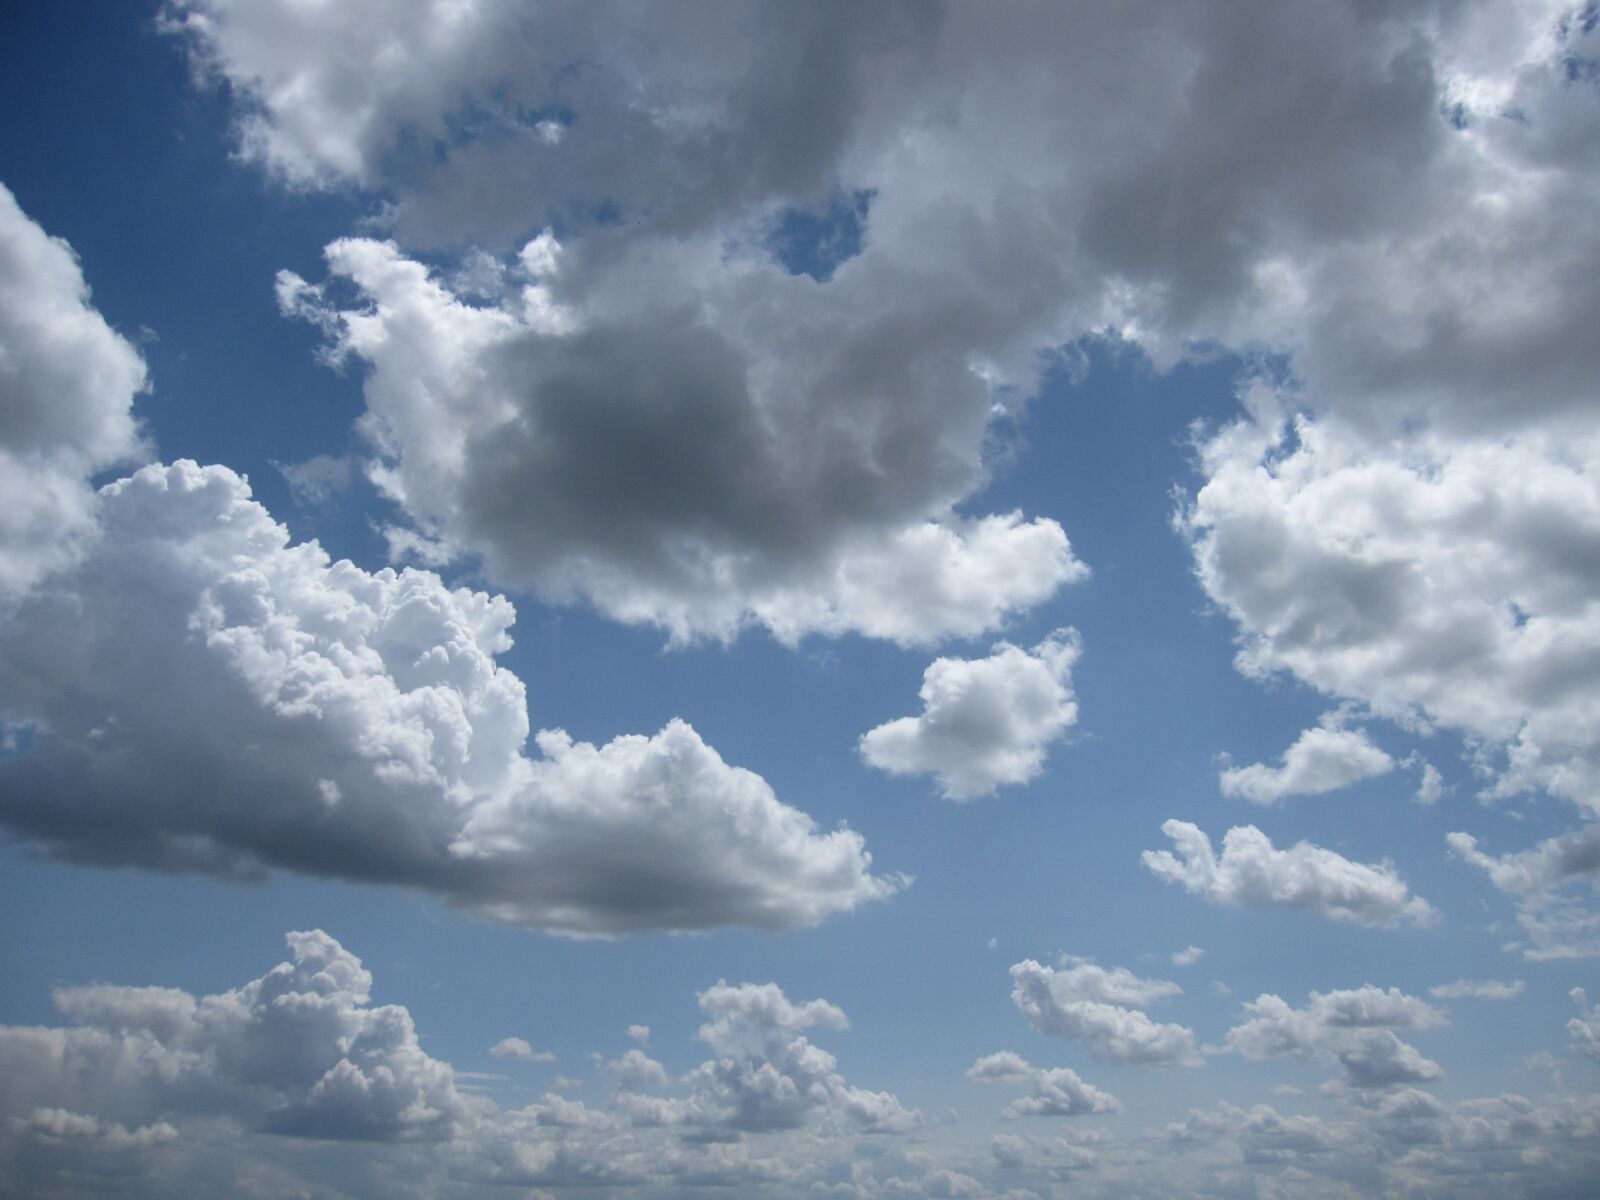 Canon PowerShot SD880 IS (Digital IXUS 870 IS / IXY Digital 920 IS) sample photo. "Sky, clouds, mood" photography